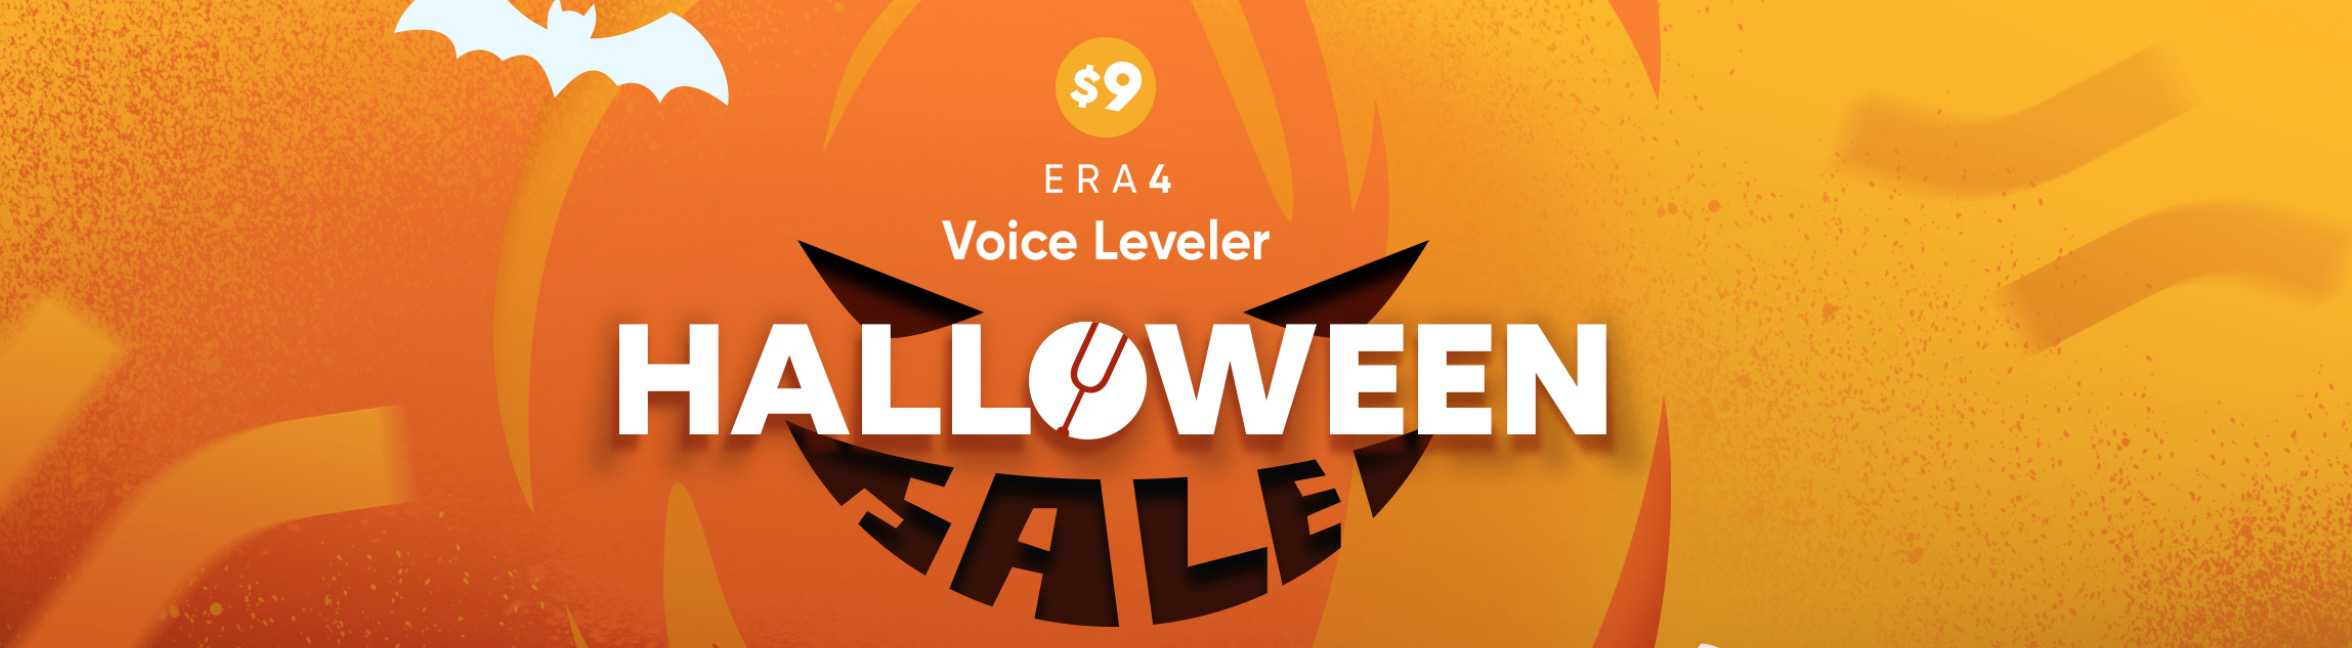 ERA Voice Leveler halloween offer